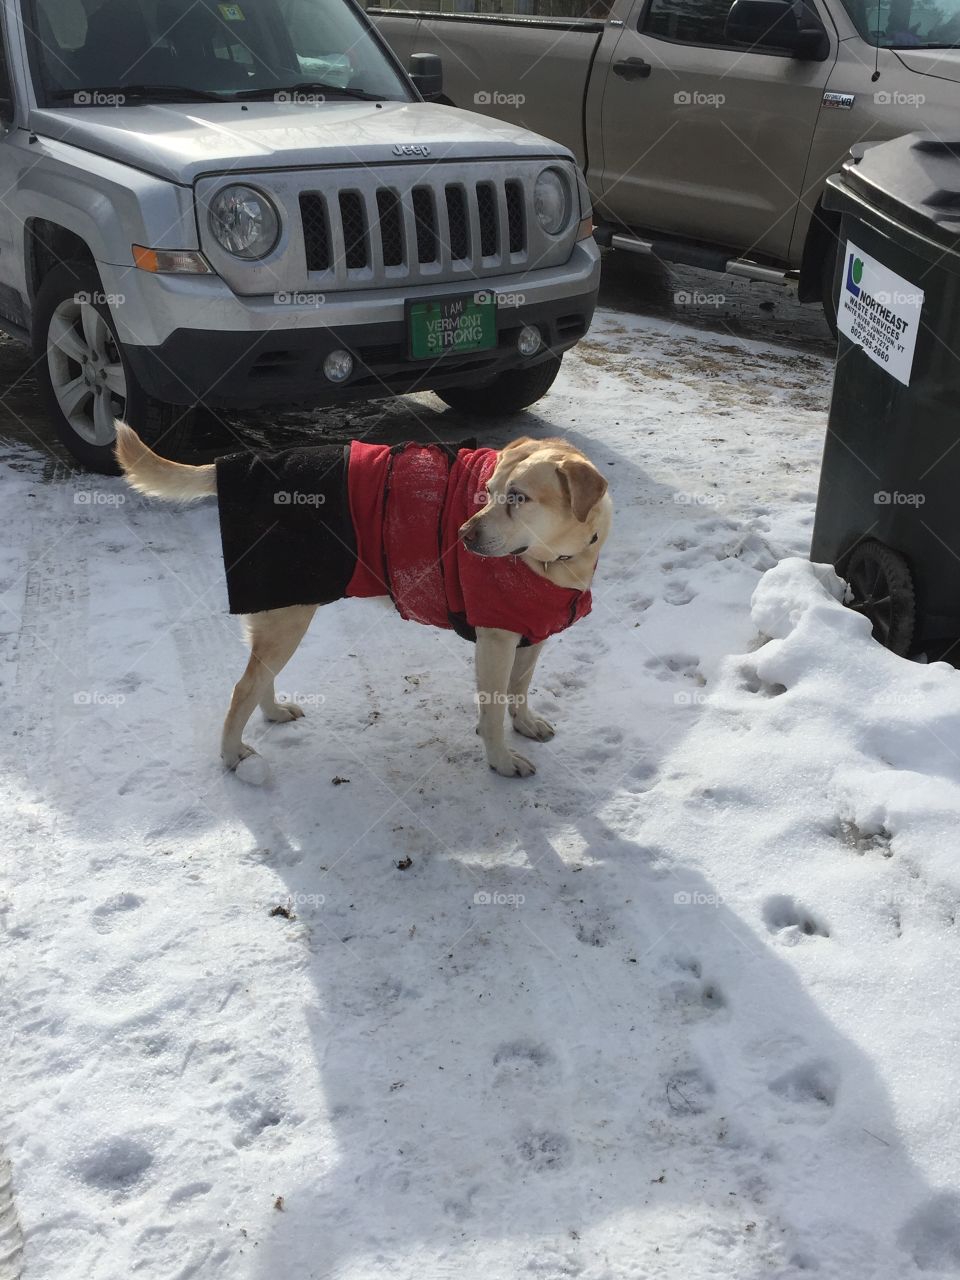 New coat on a freezing day 